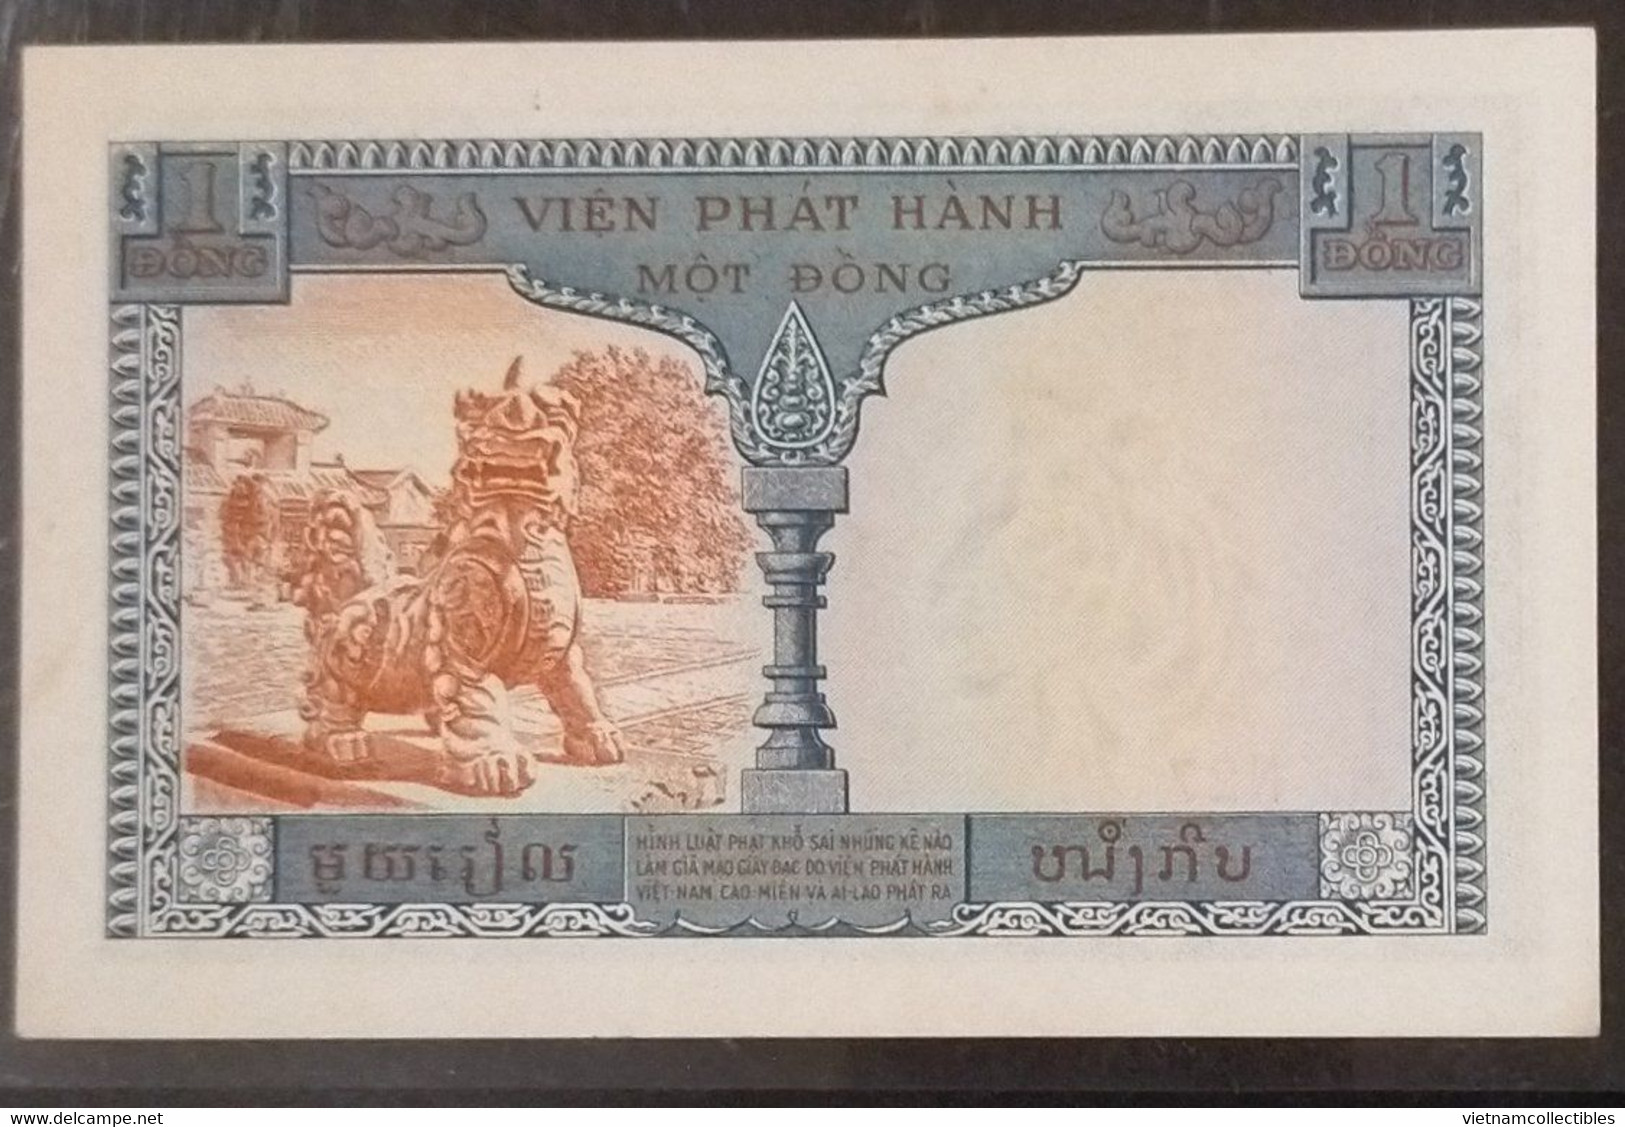 Indochine Indochina Vietnam Viet Nam Laos Cambodia 1 Piastre UNC Banknote Note 1954 - Pick # 105 / 2 Photos - Indochine